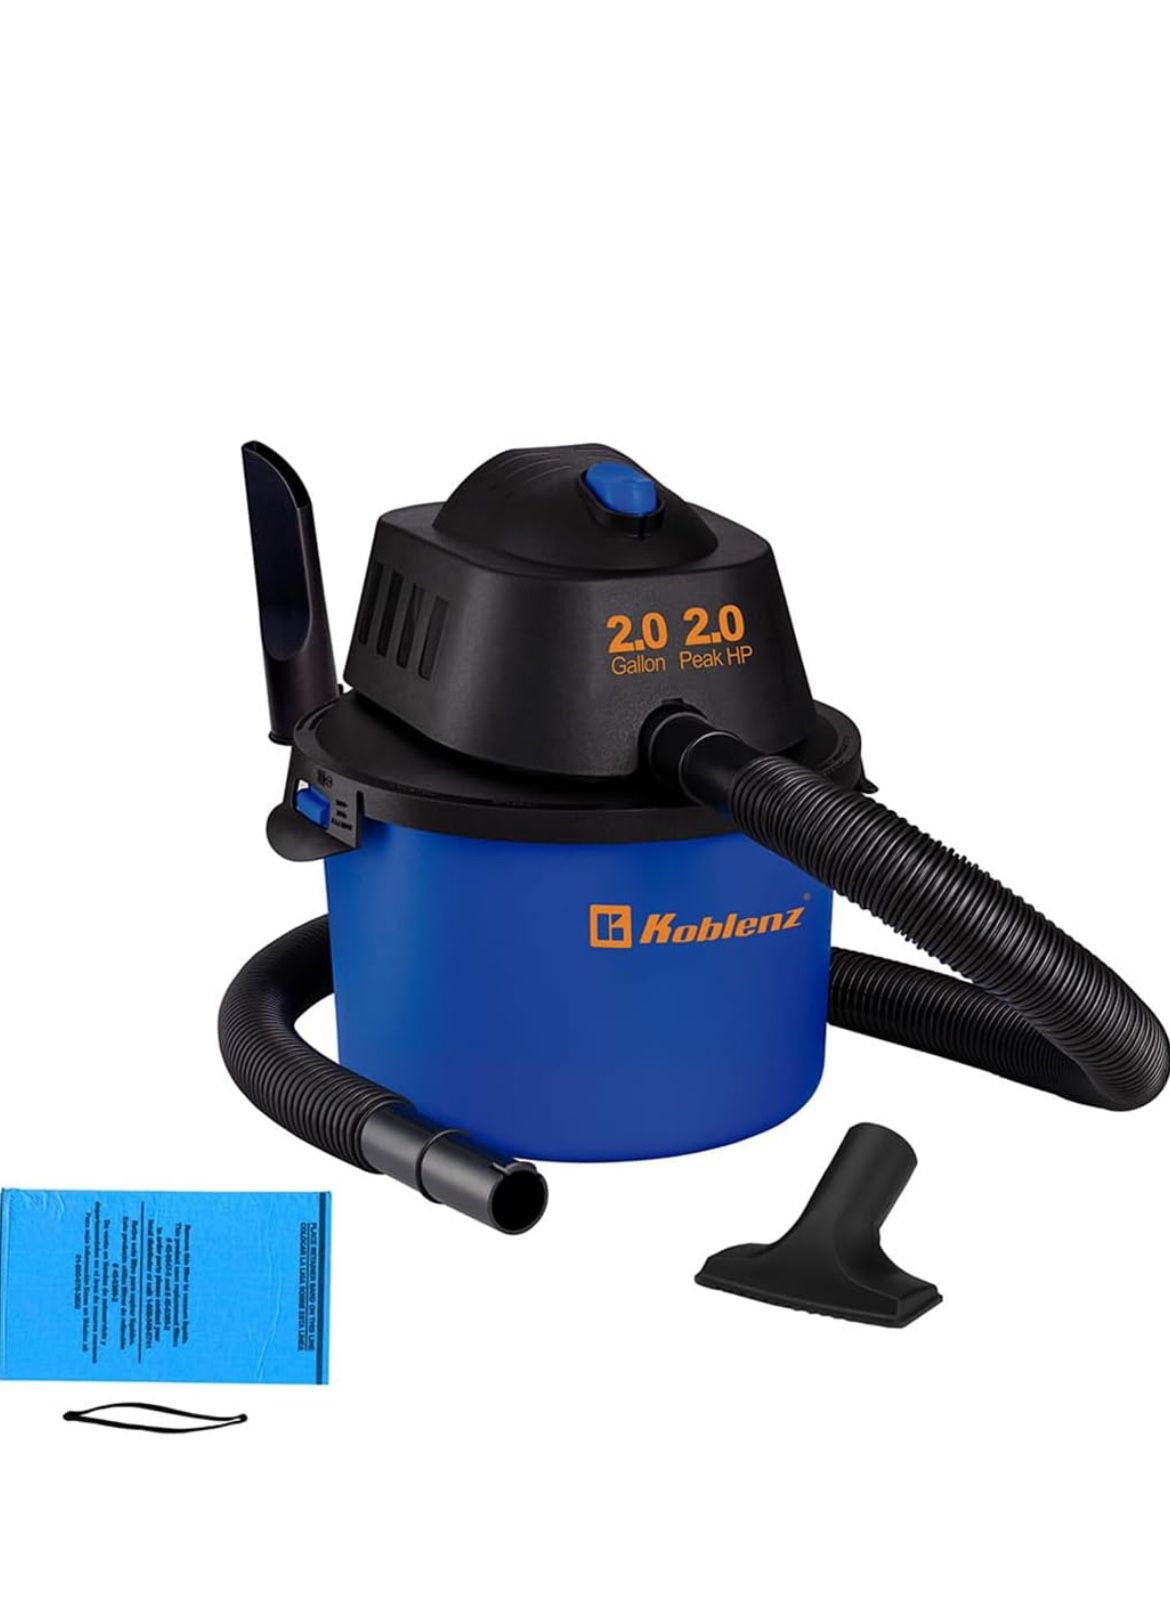 Koblenz WD-2L Portable Wet-Dry Vacuum, 2.0 Gallon/2.0HP Compact Lightweight, Blue+Black